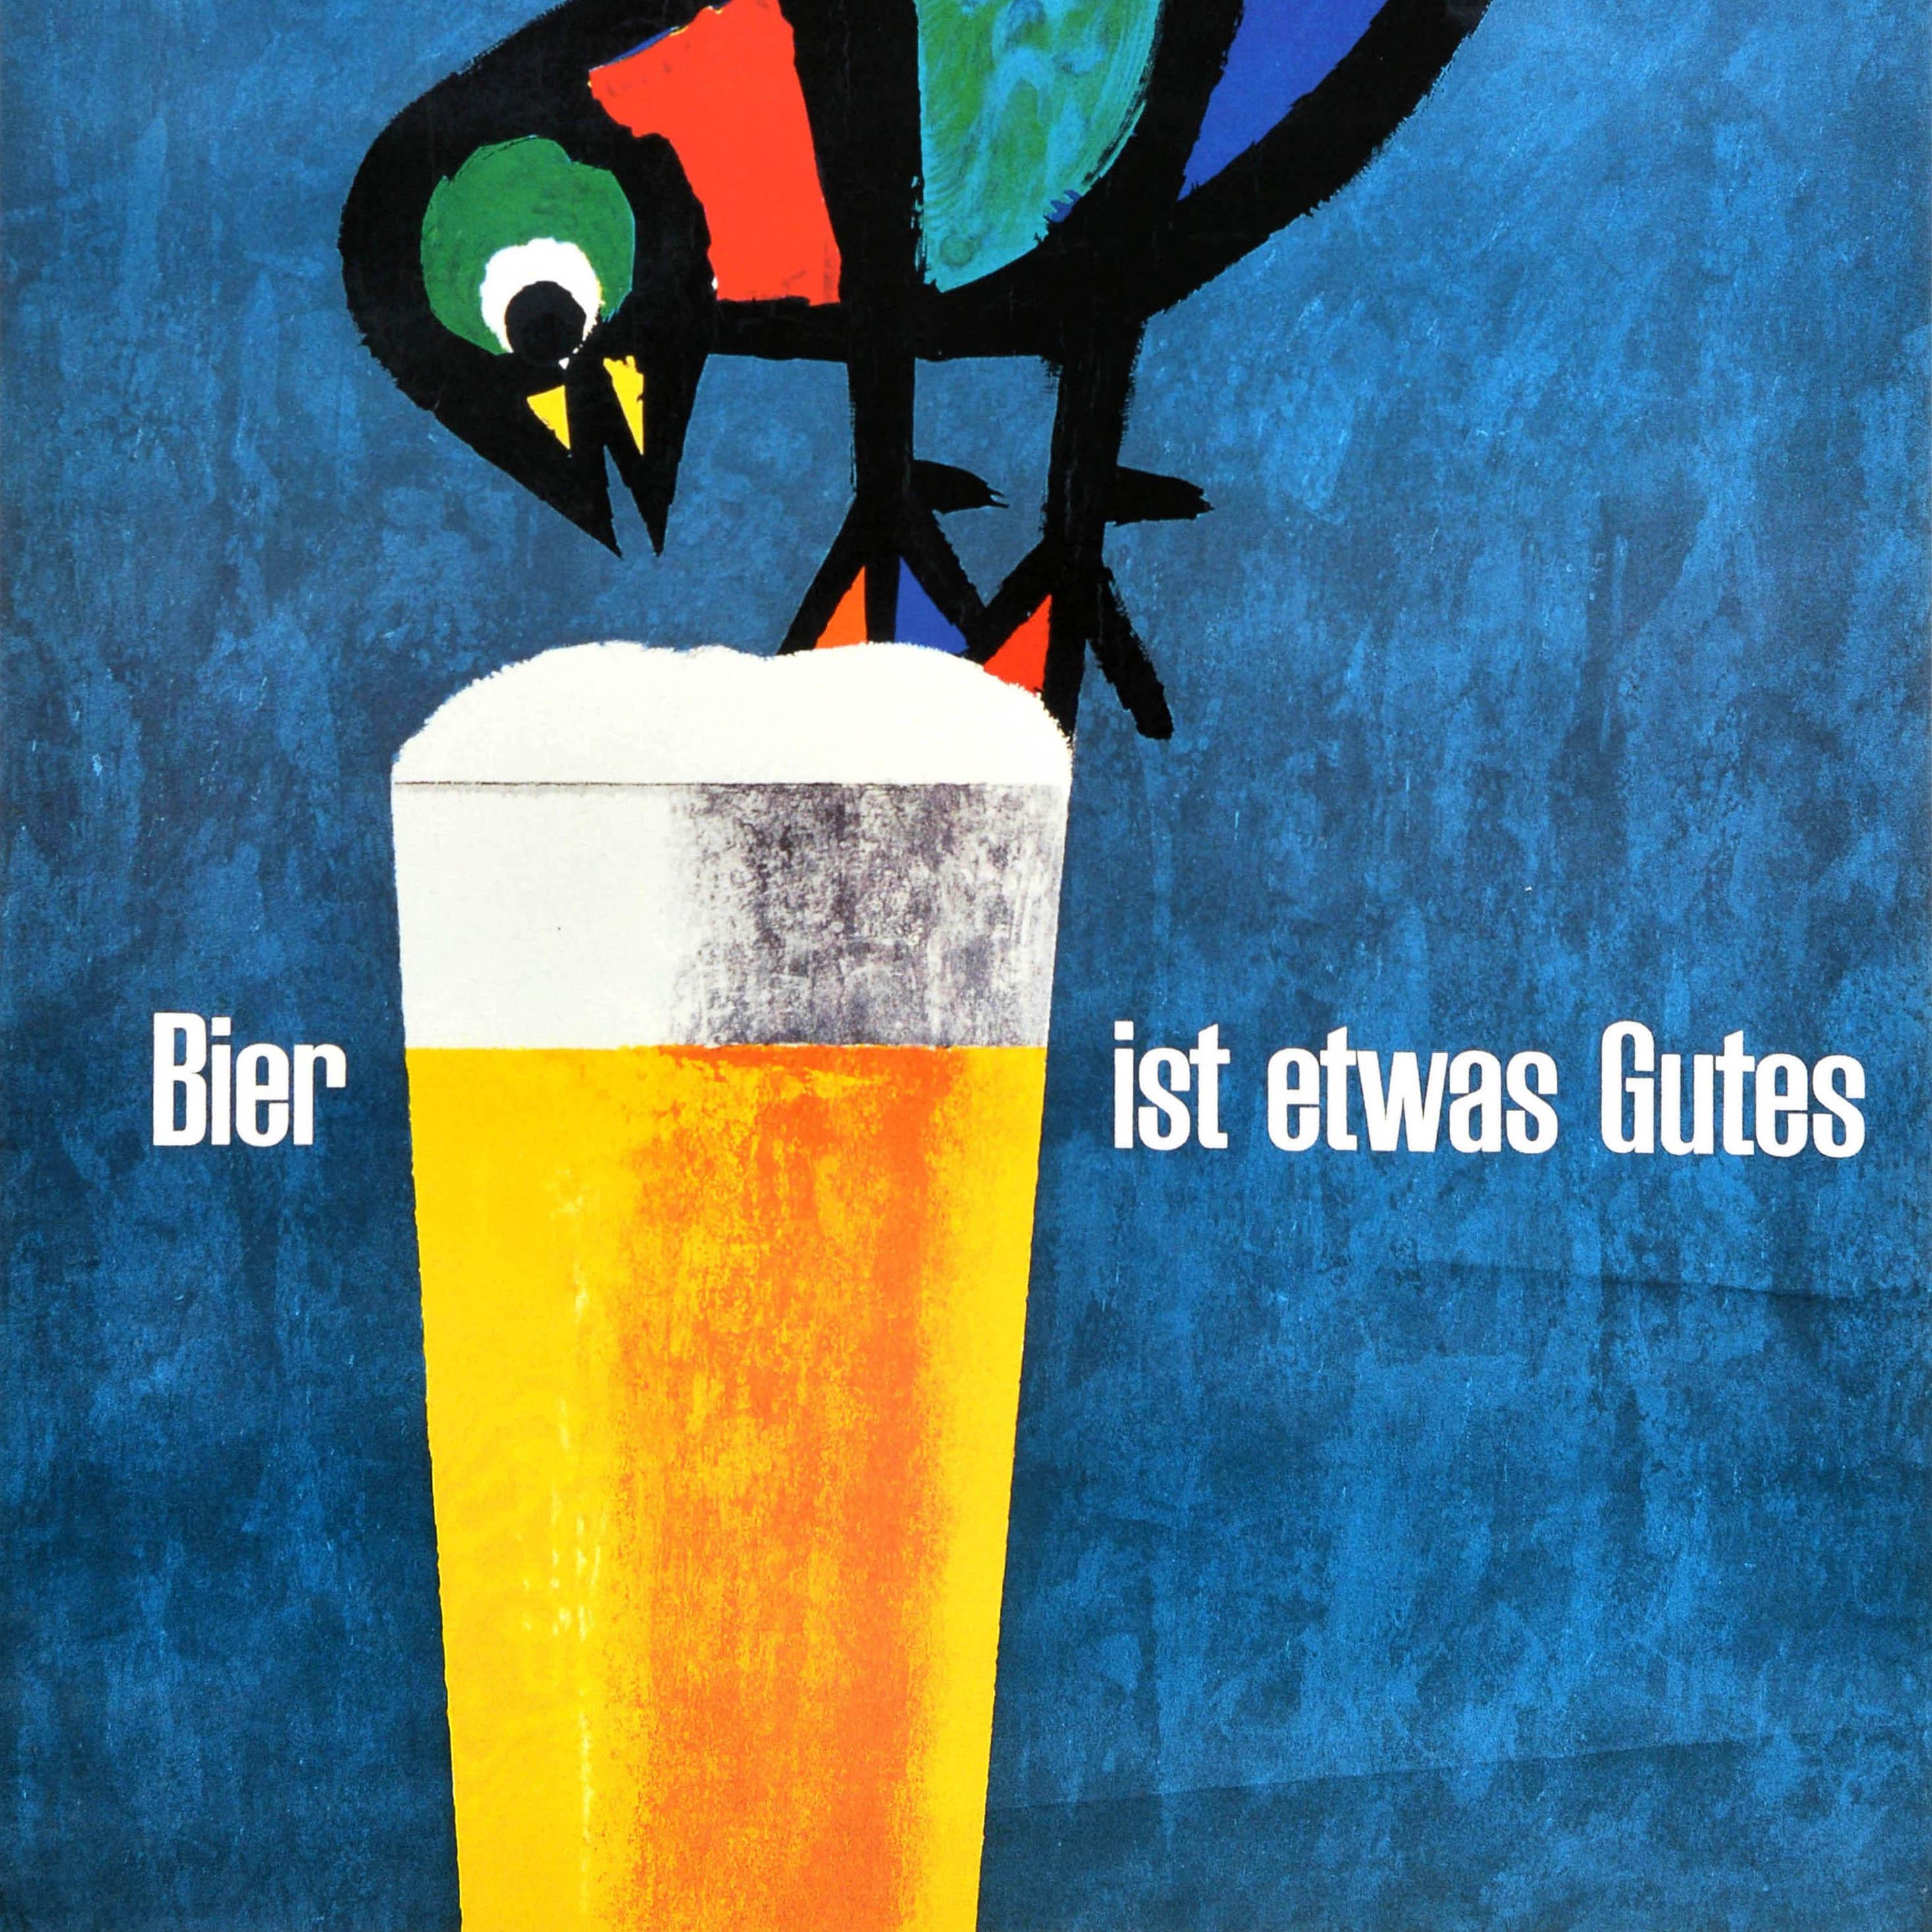 Original Vintage Drink Advertising Poster Beer Is A Good Thing Bird Piatti Bier - Blue Print by Celestino Piatti